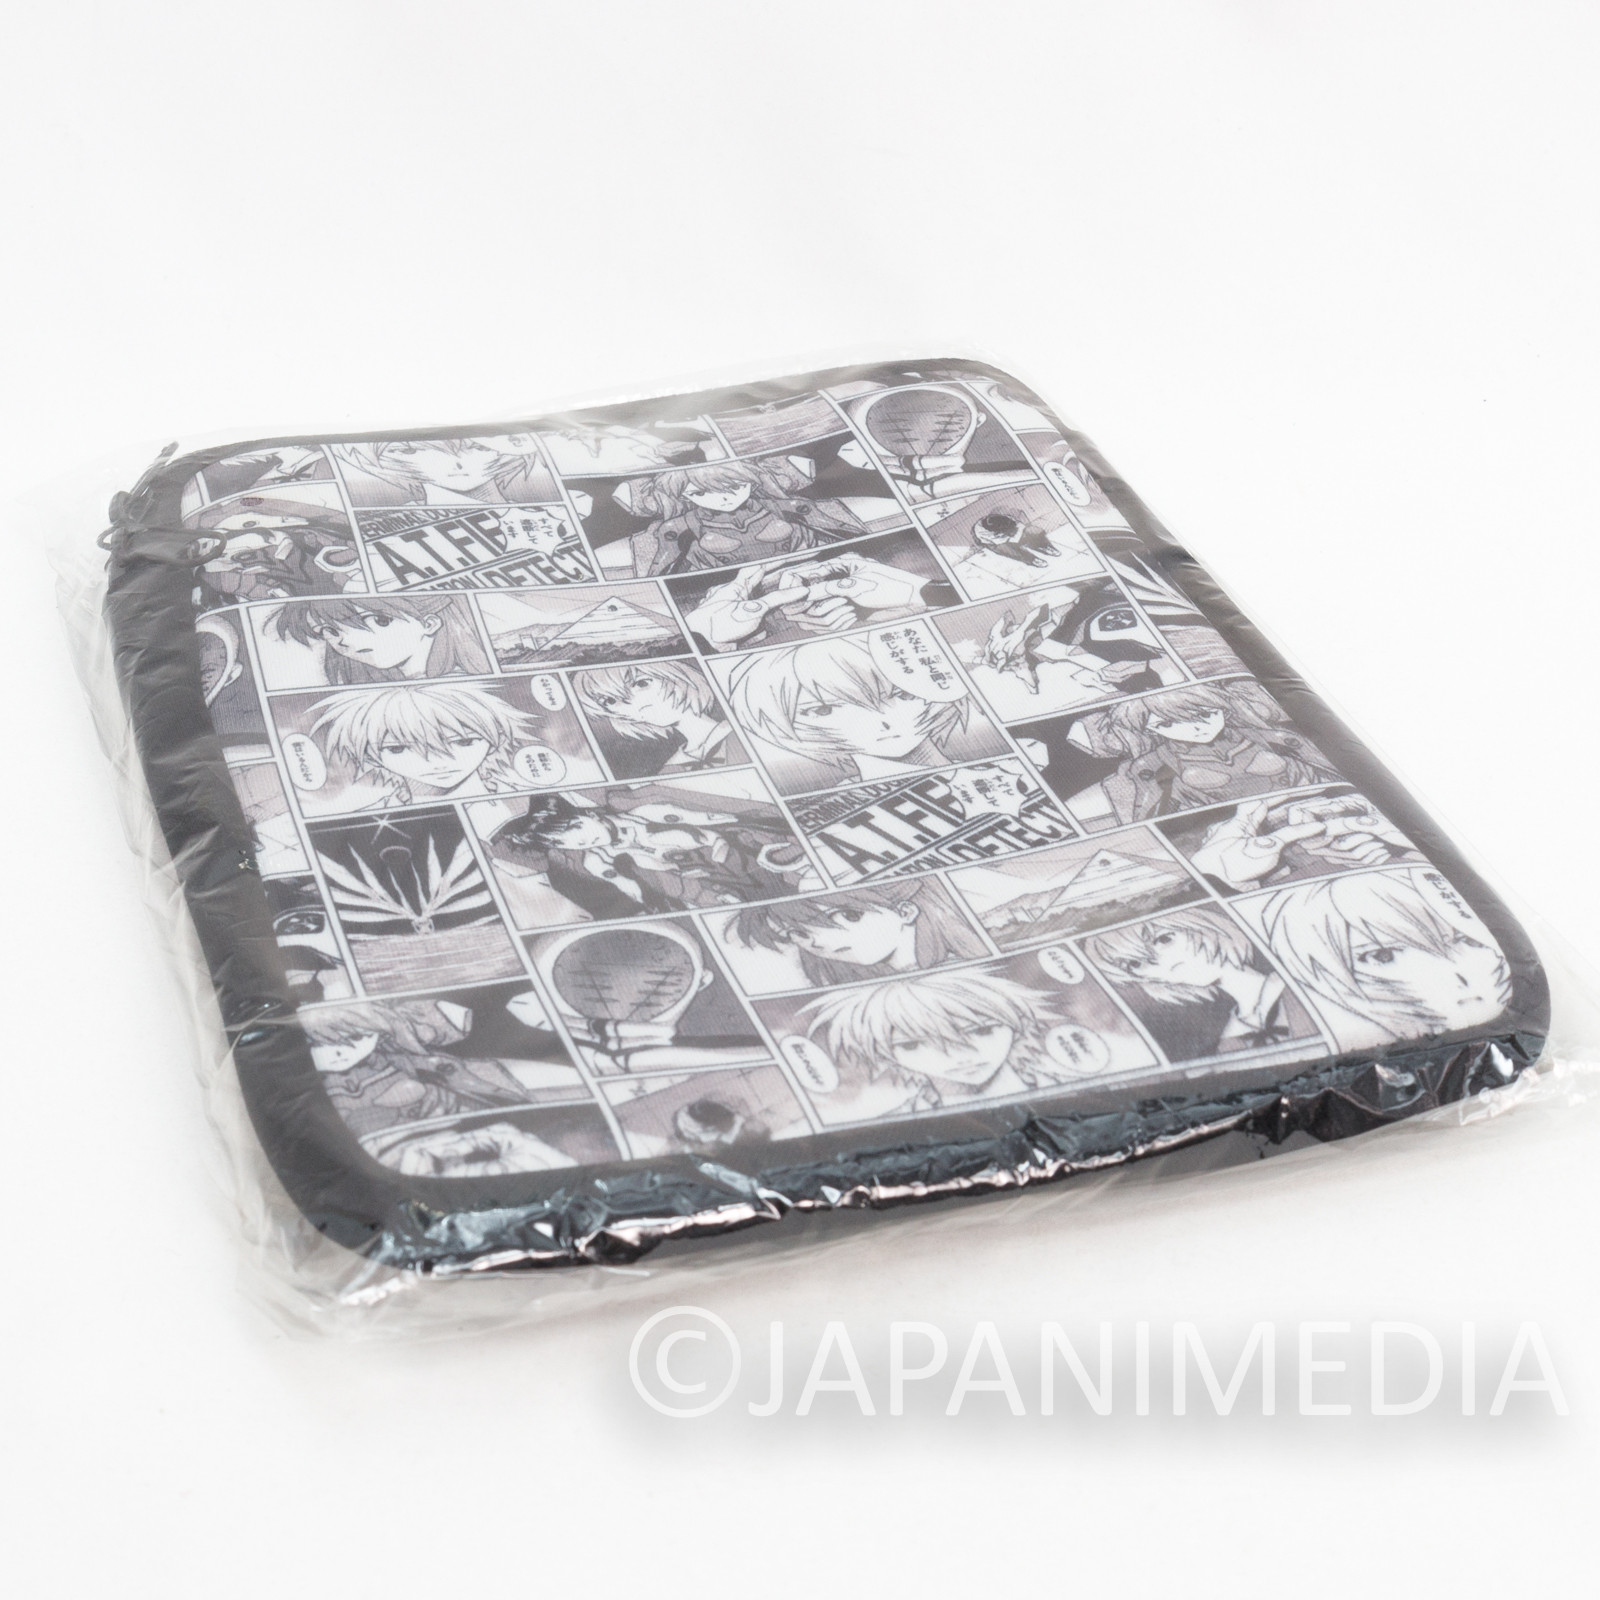 Evangelion Pouch Mini Bag 6x8.5 inch JAPAN